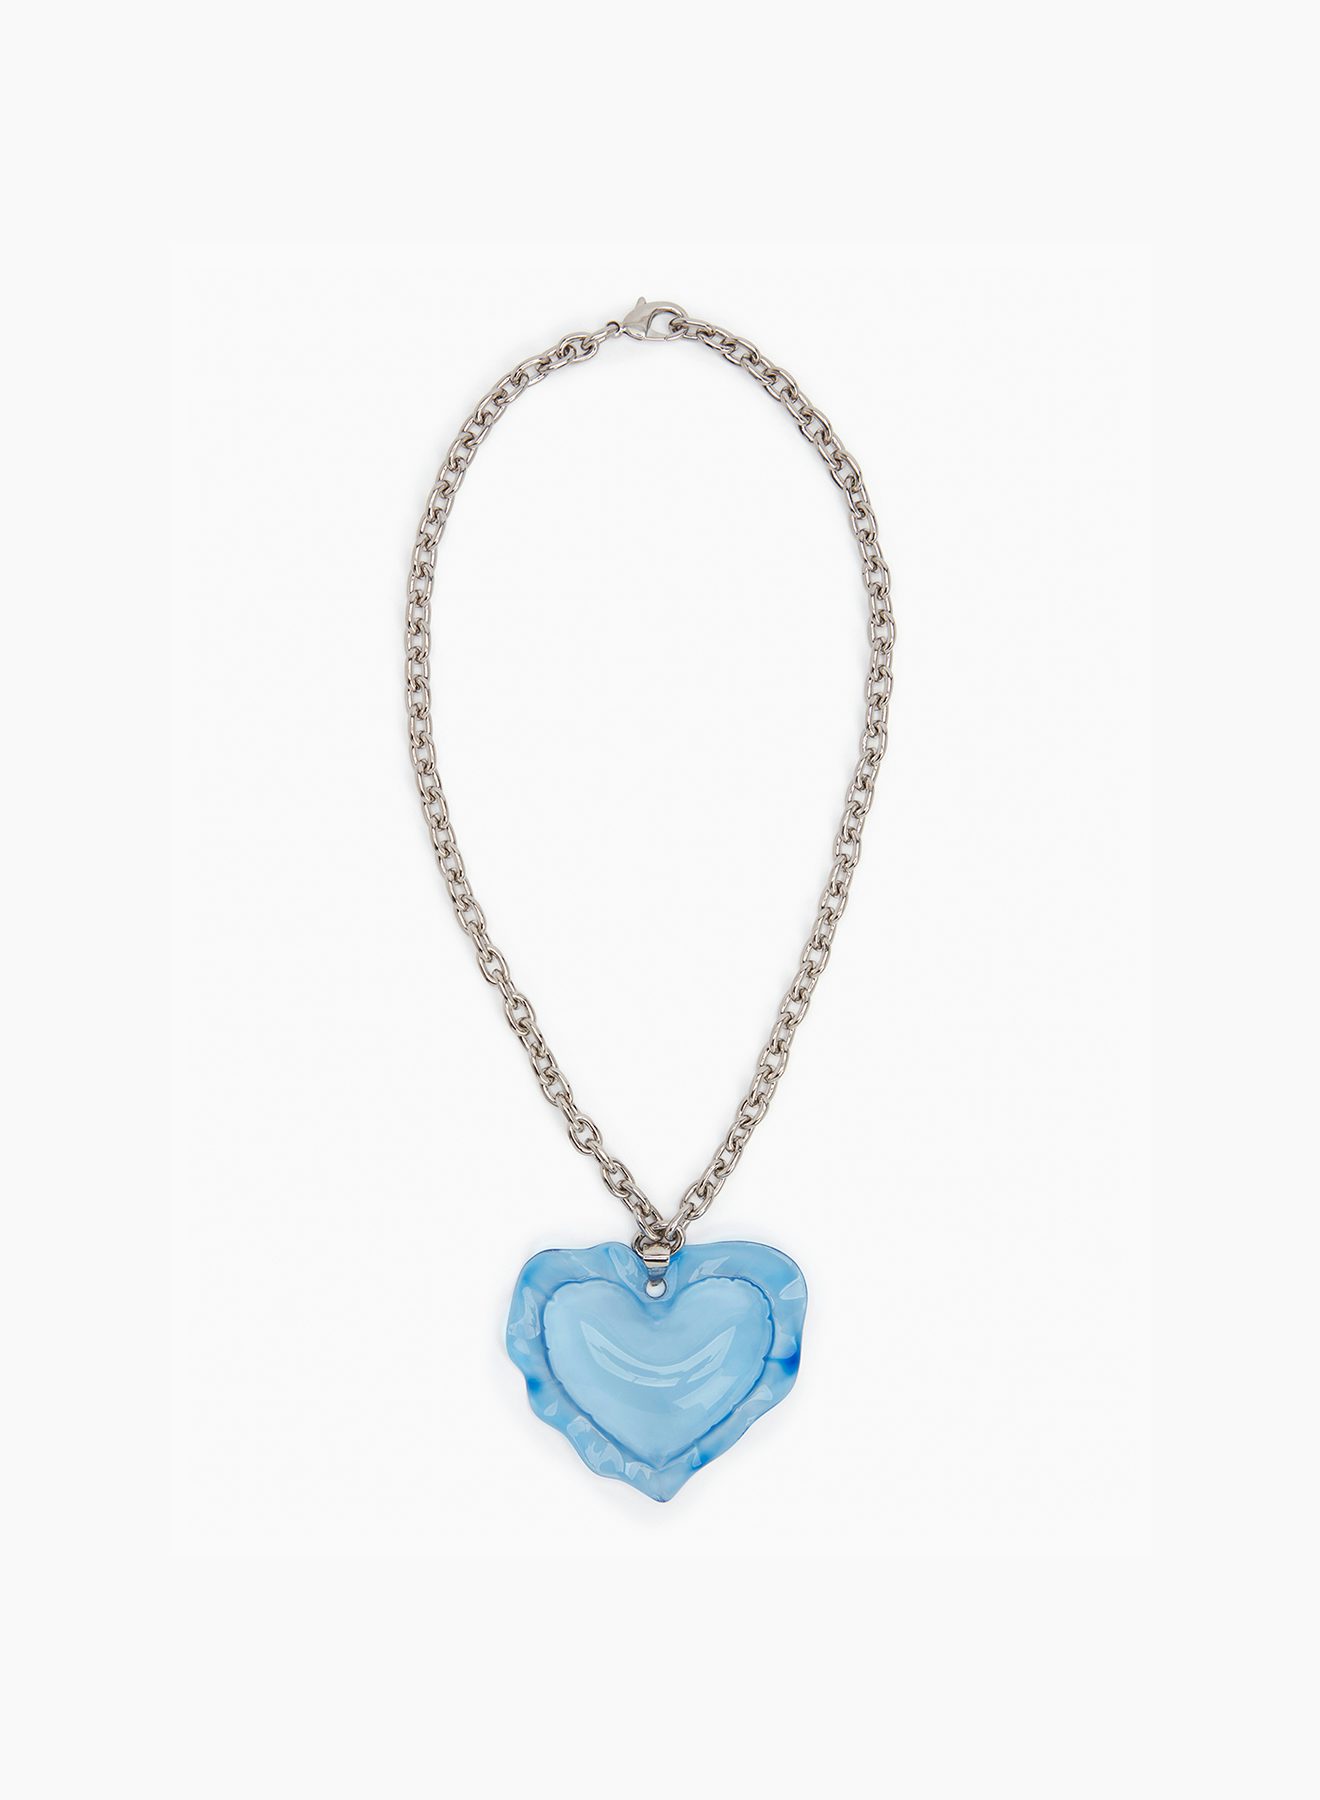 Cushion heart necklace in sky blue - Nina Ricci